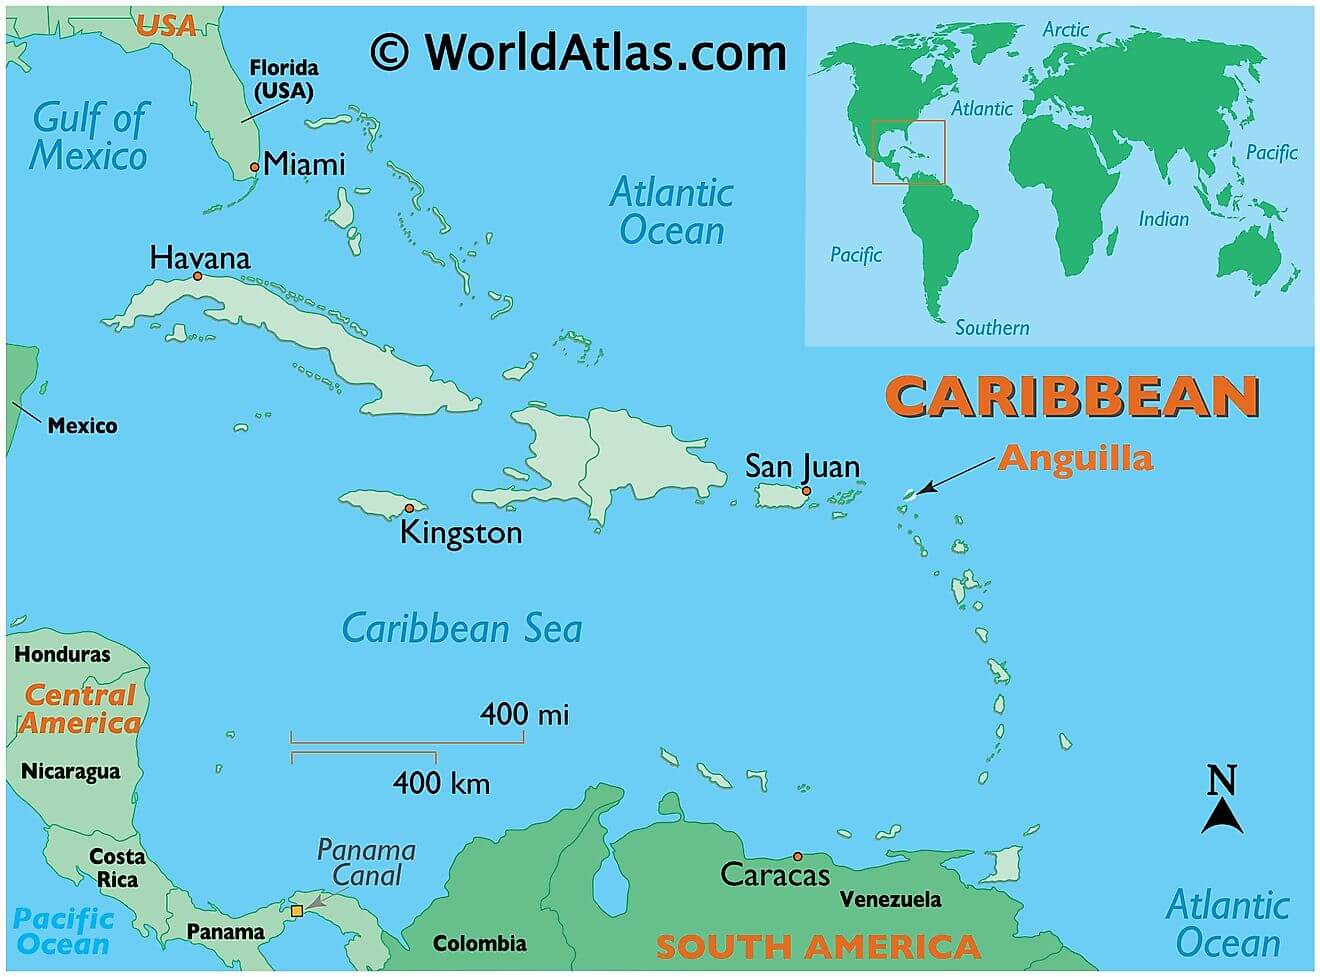 Where is Anguilla?